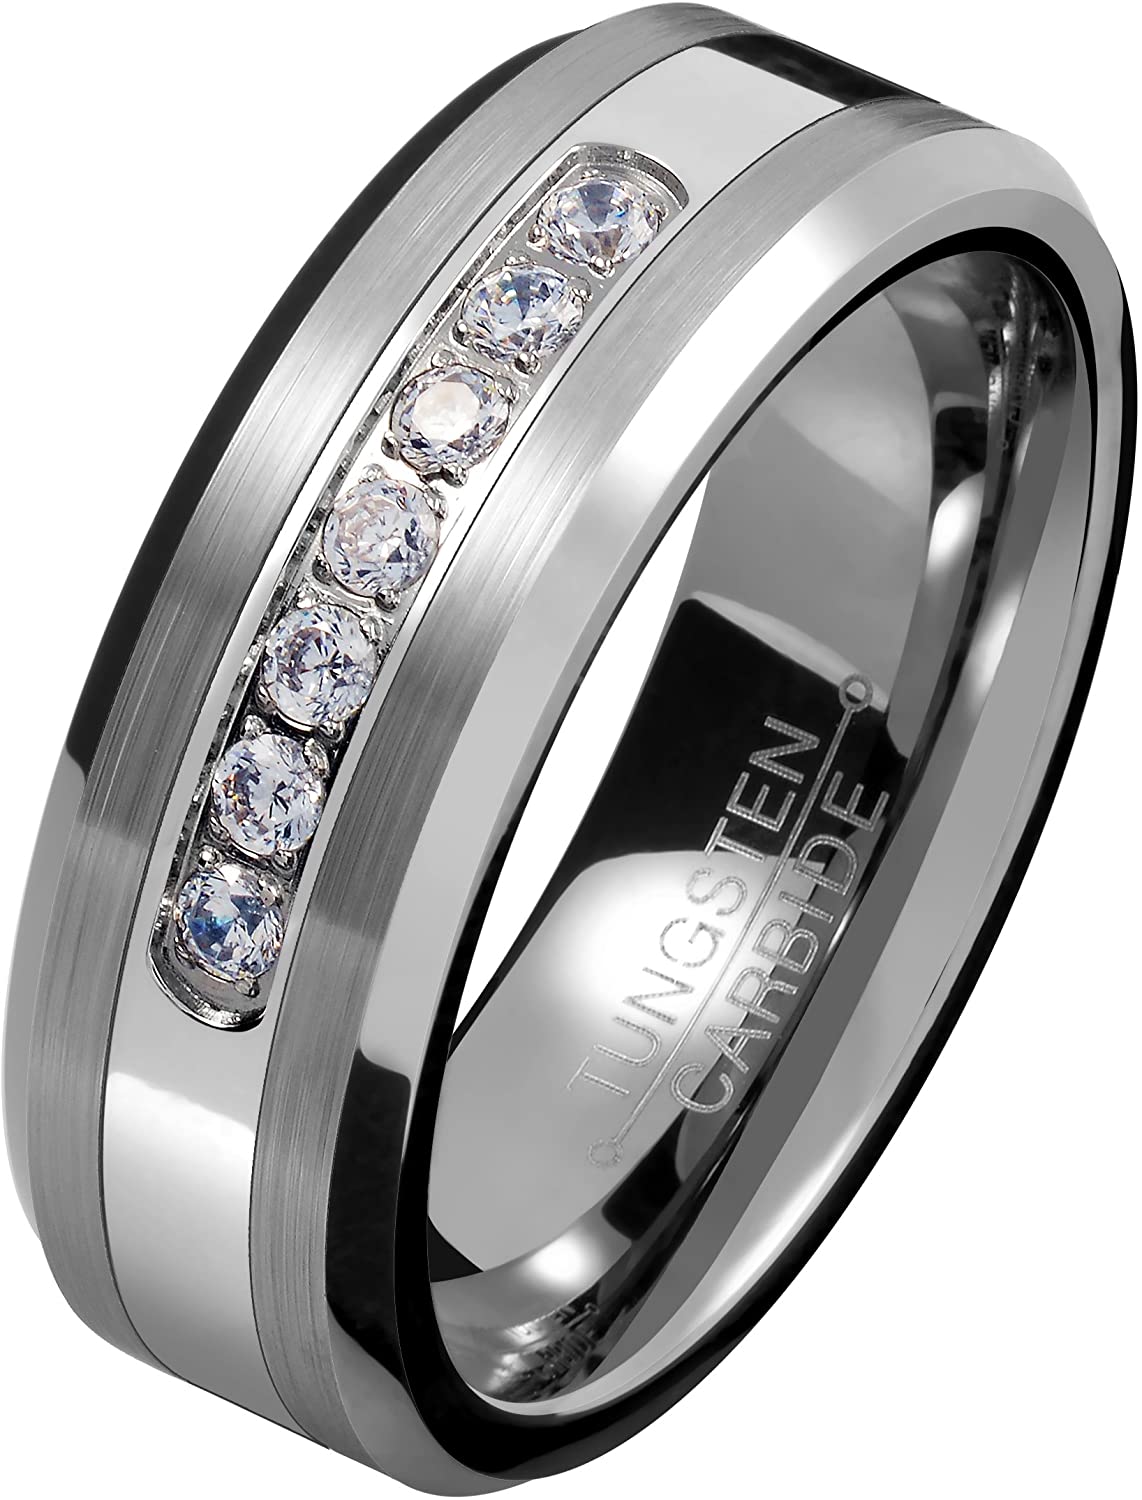 ATOP Mens Silver 8mm Tungsten Carbide Ring Cubic Zirconia Wedding Jewelry